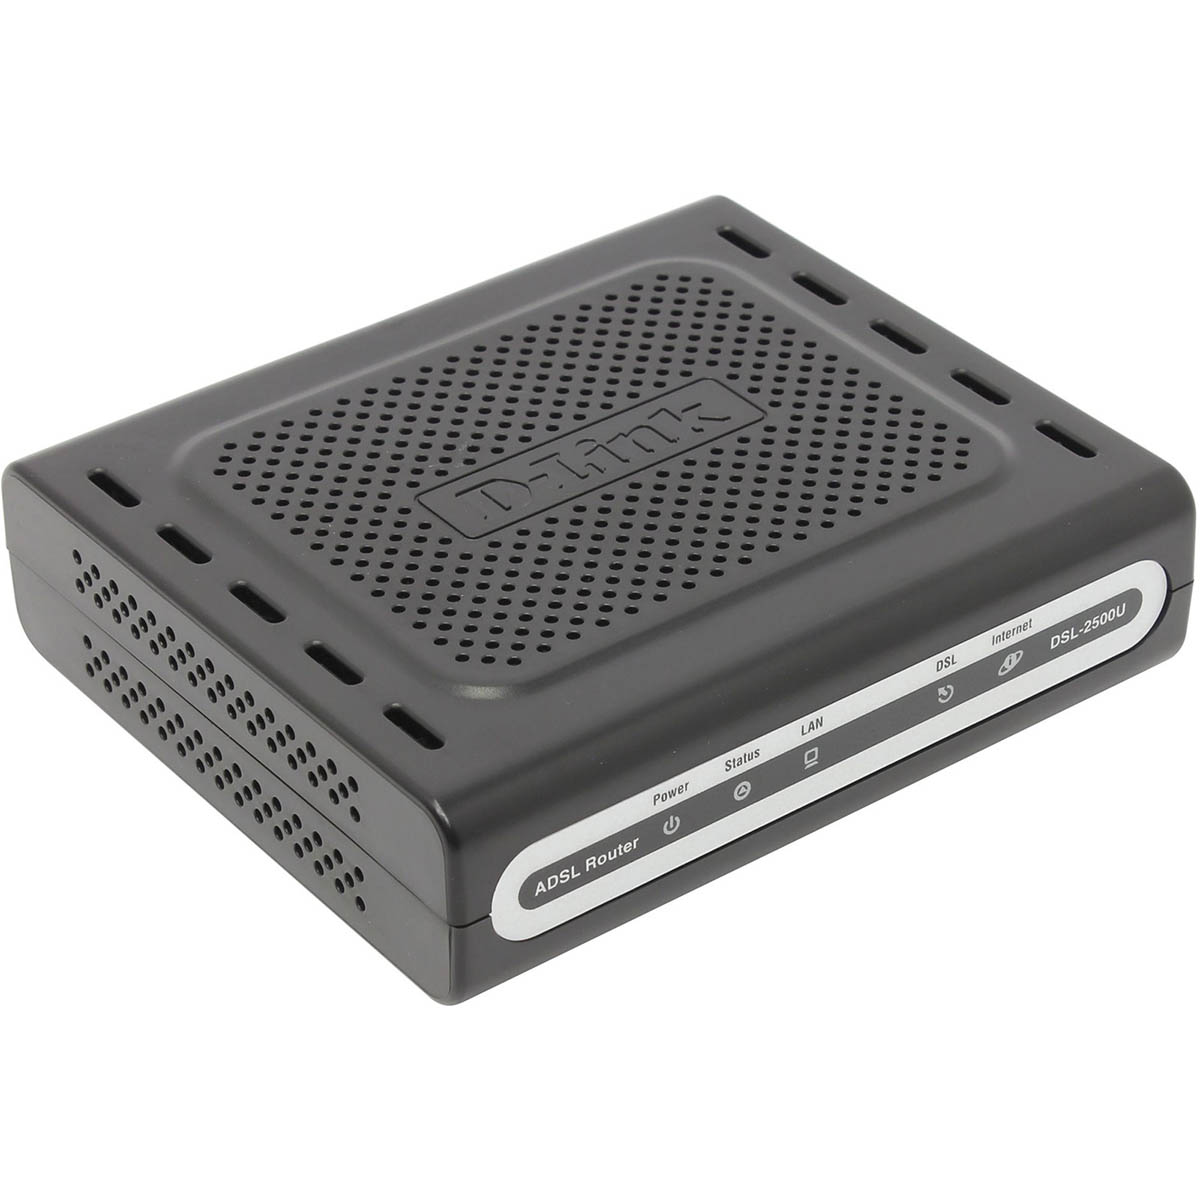 Роутер, маршрутизатор ADSL D-LINK DSL-2500U/BA, ADSL2/2+ (AnnexA/L/M), цвет черный